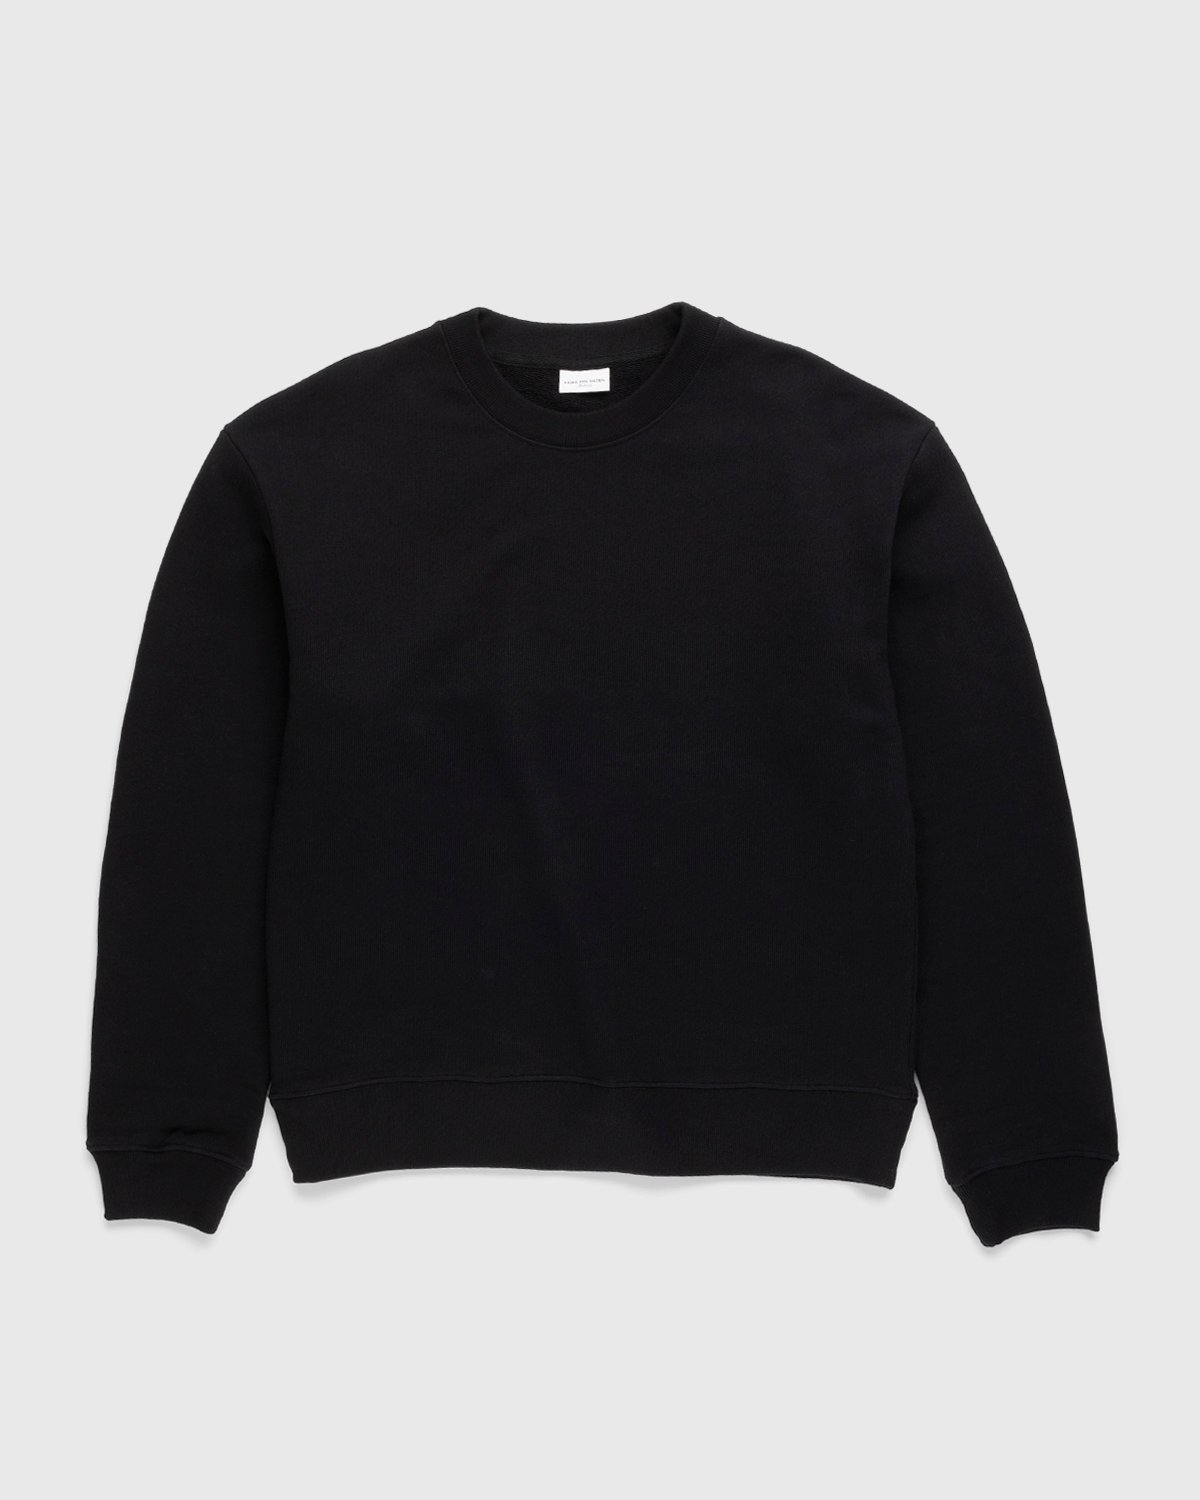 Dries van Noten - Haf Crewneck Sweater Black - Clothing - Black - Image 1